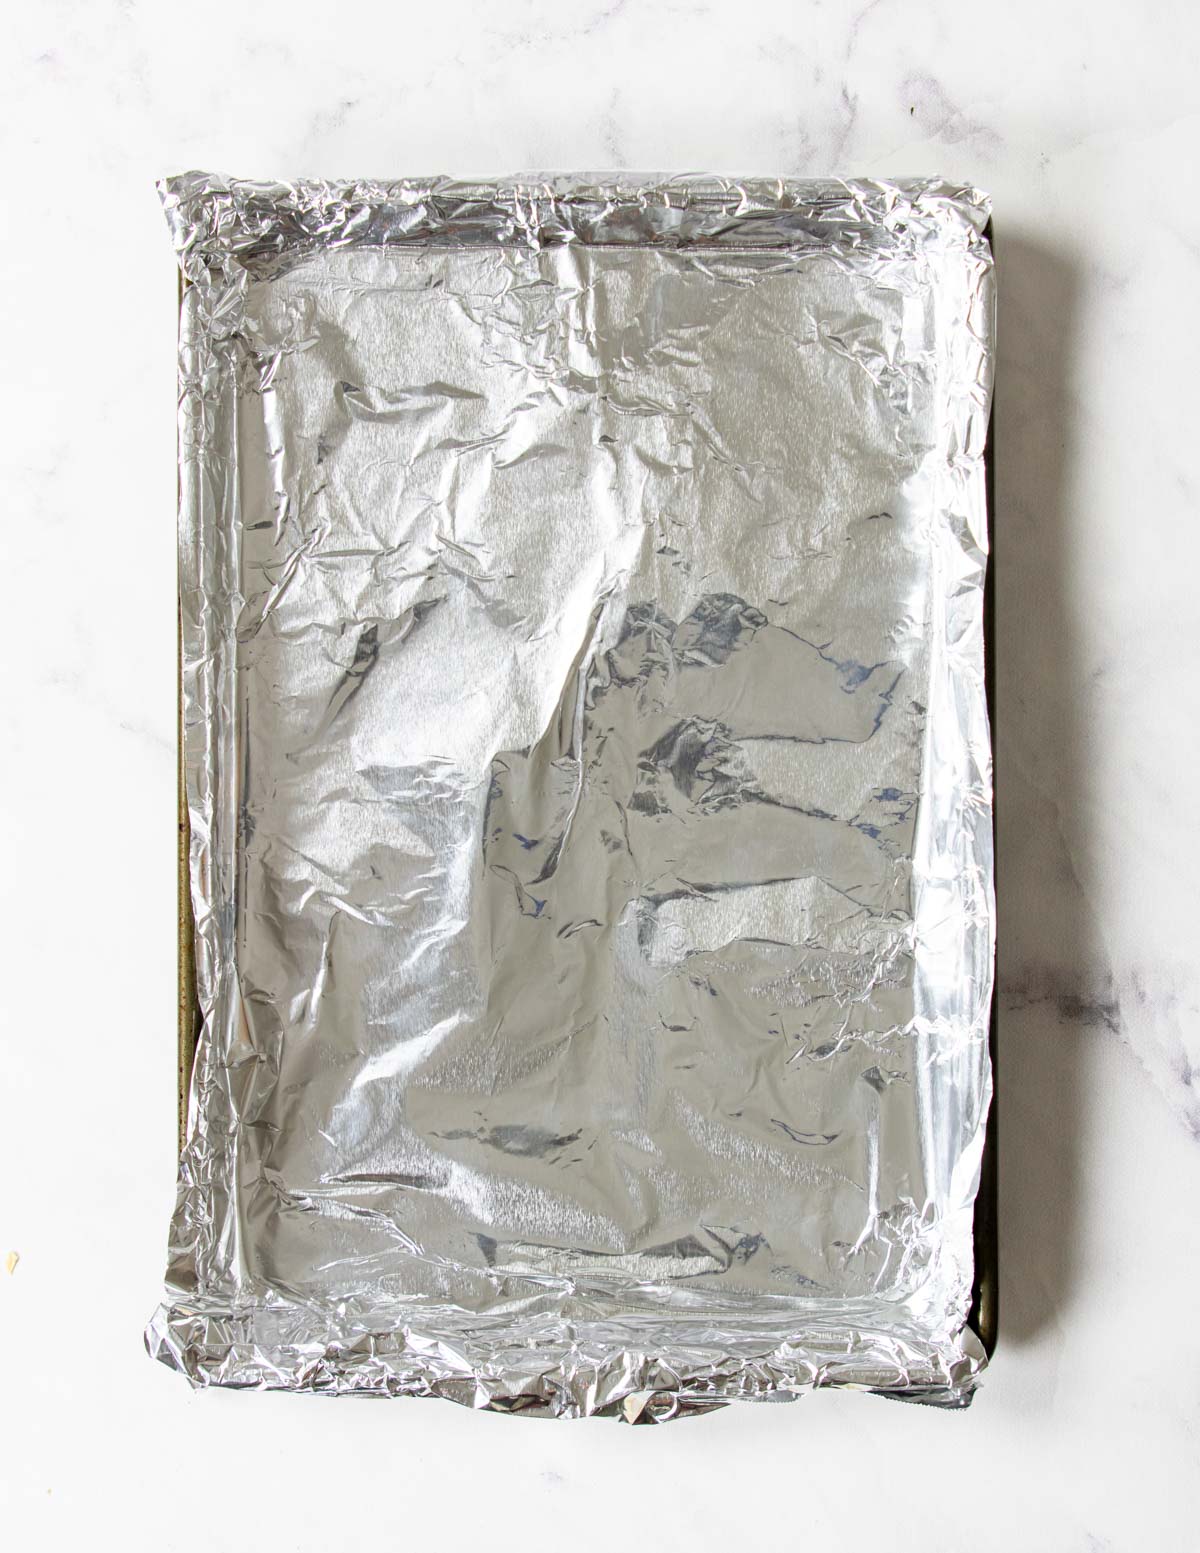 rimmed baking sheet with foil